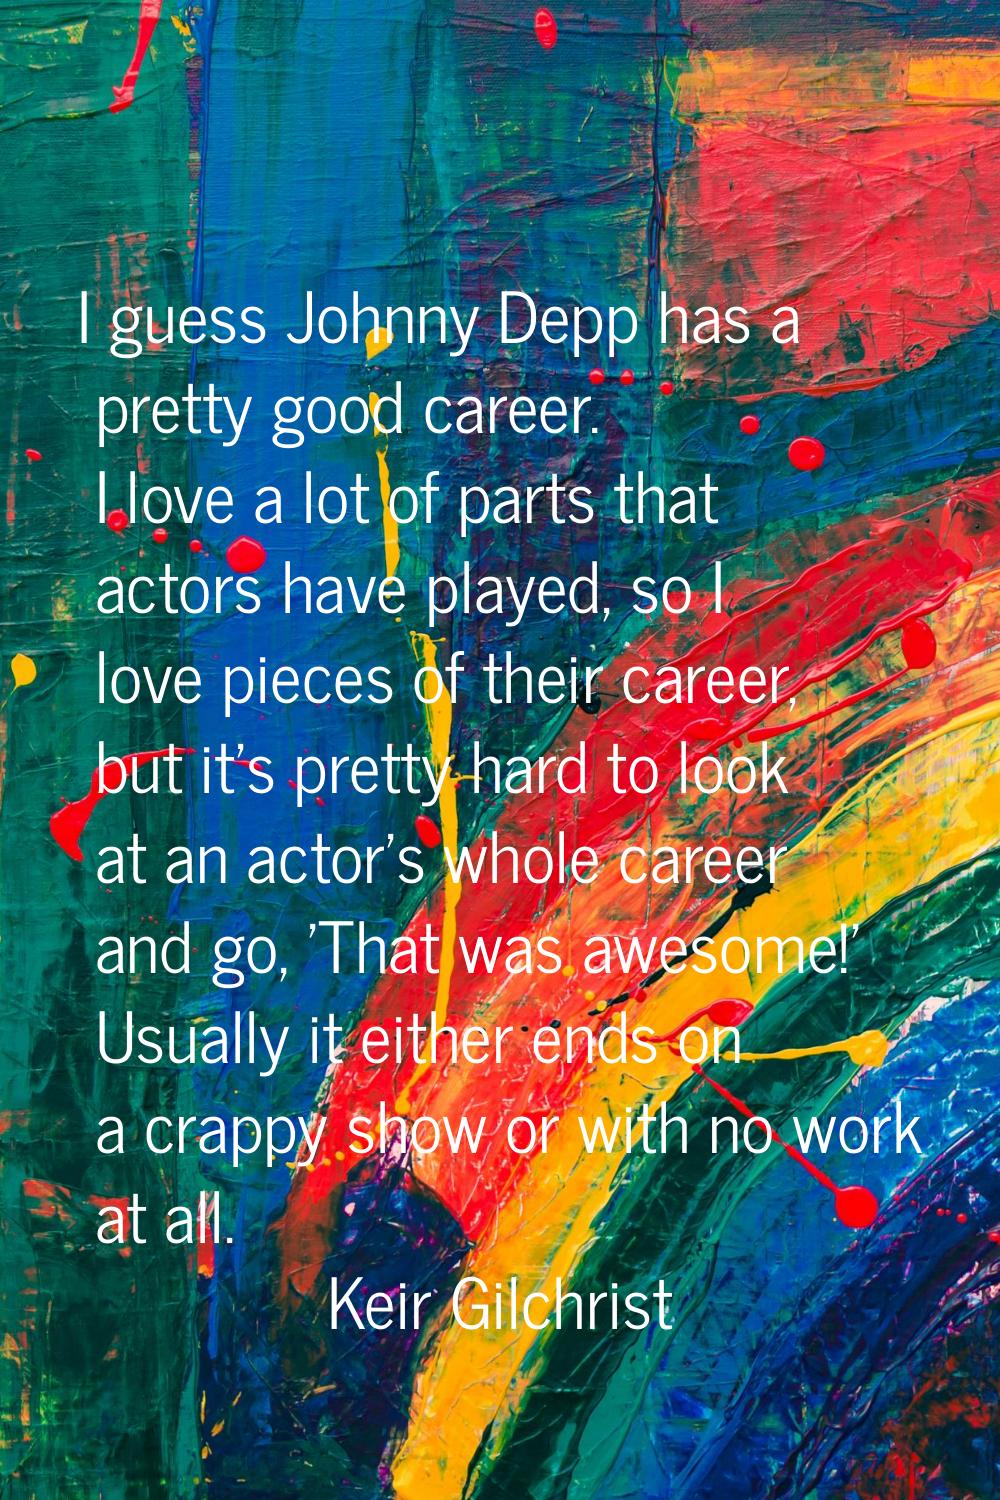 I guess Johnny Depp has a pretty good career. I love a lot of parts that actors have played, so I l